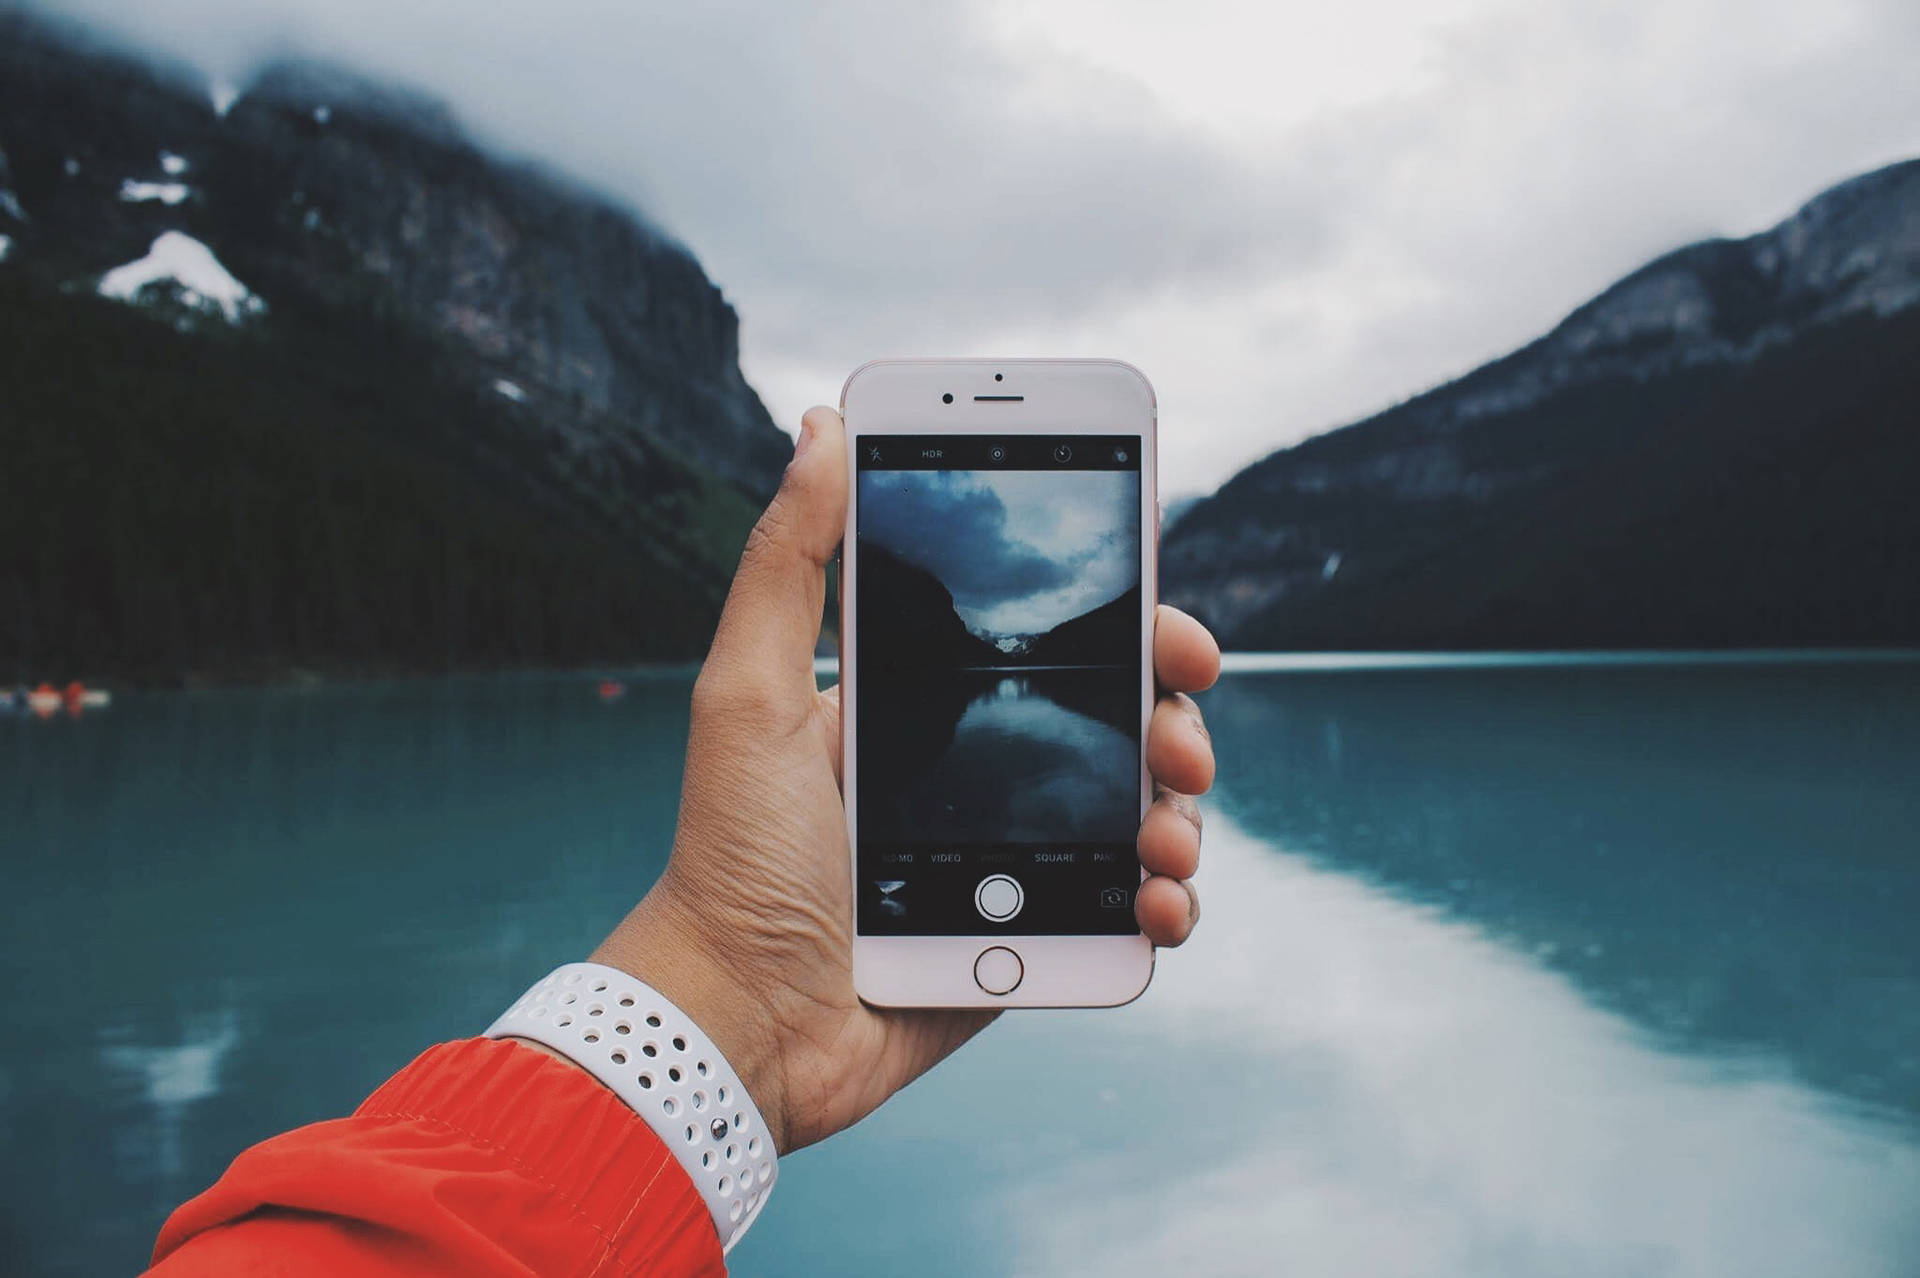 Caption: Exquisite Iphone 8 Against A Simple, Elegant Background Background